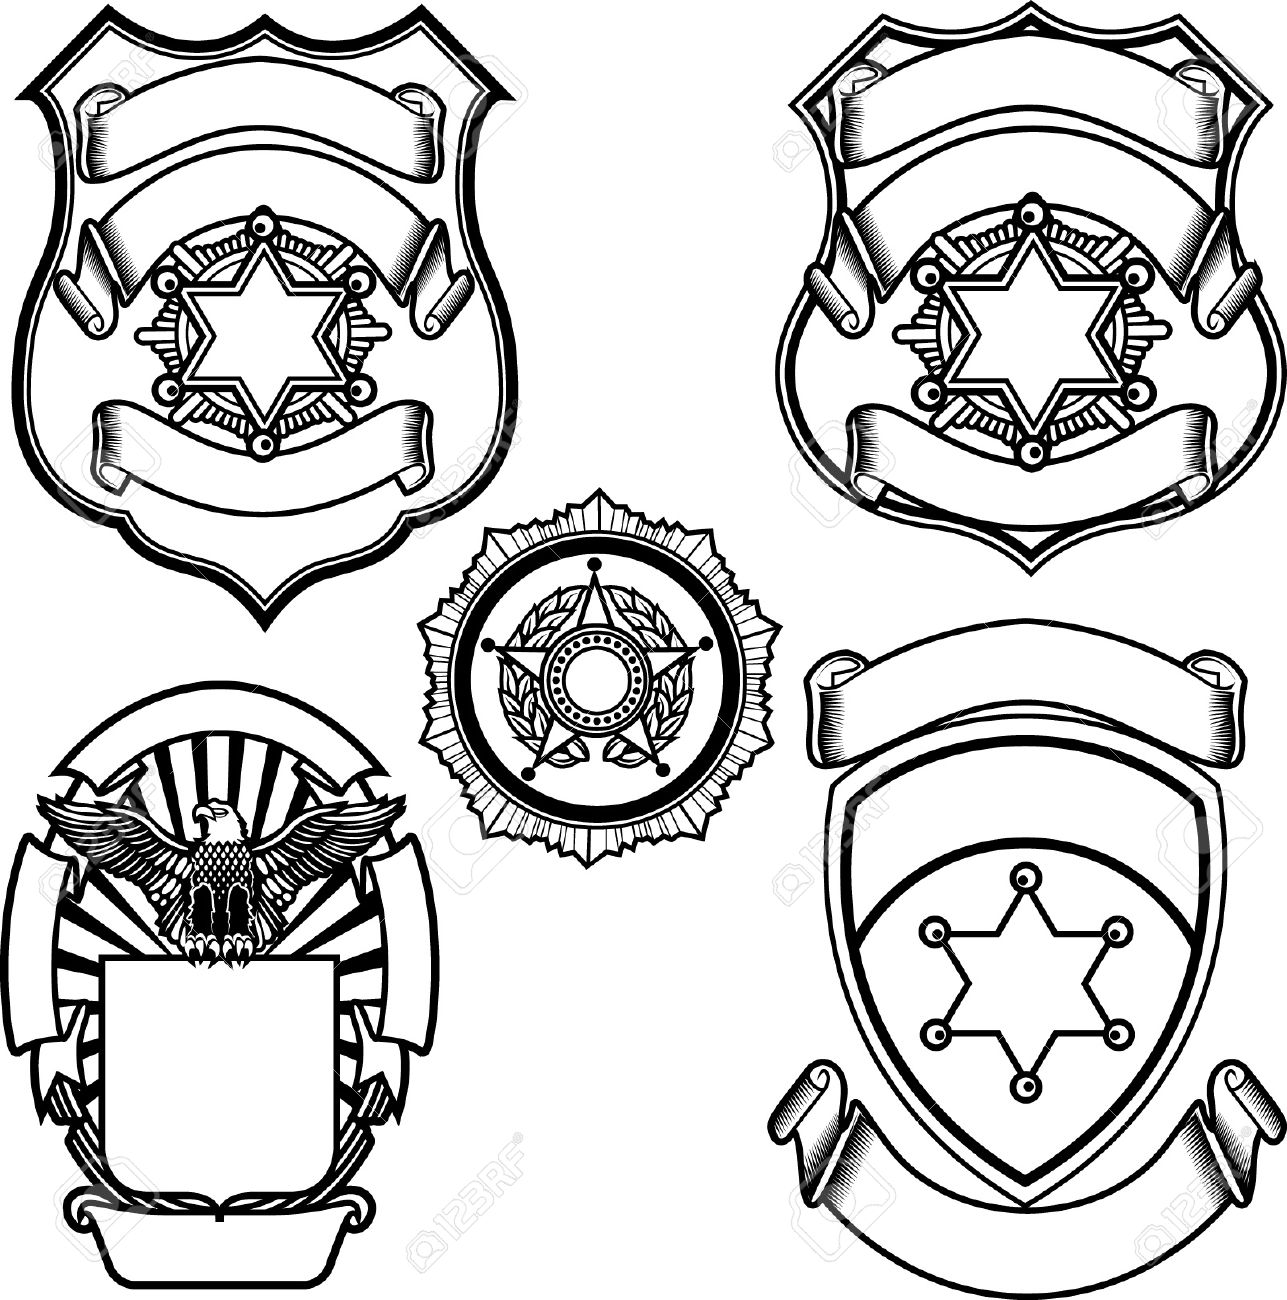 printable-police-badge-template